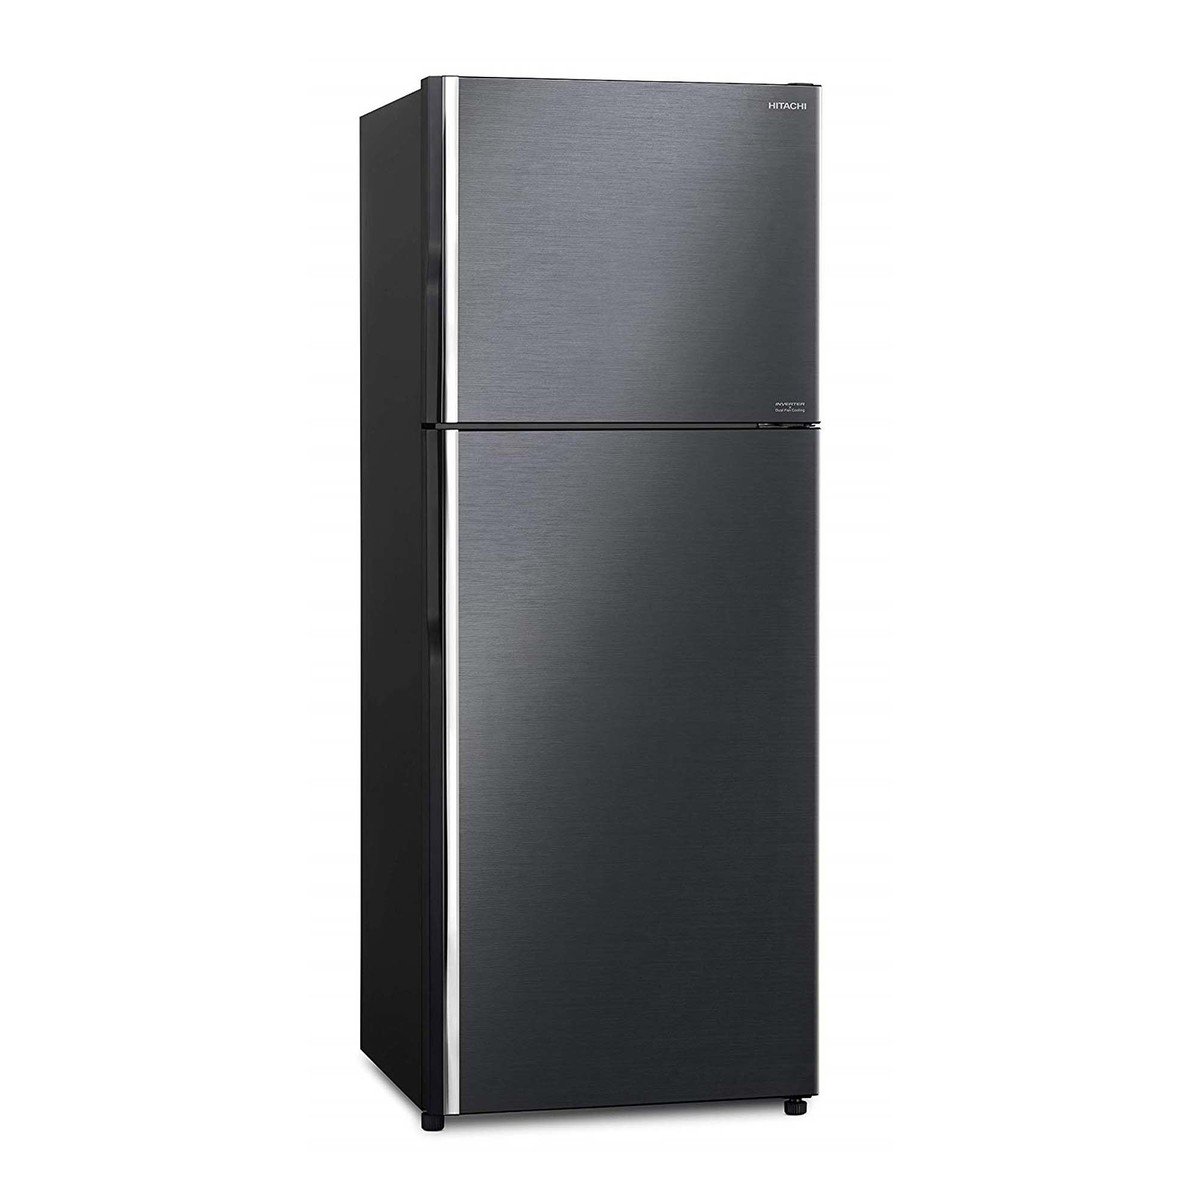 Hitachi Double Door Refrigerator RV500PUK8KBBK 500Ltr